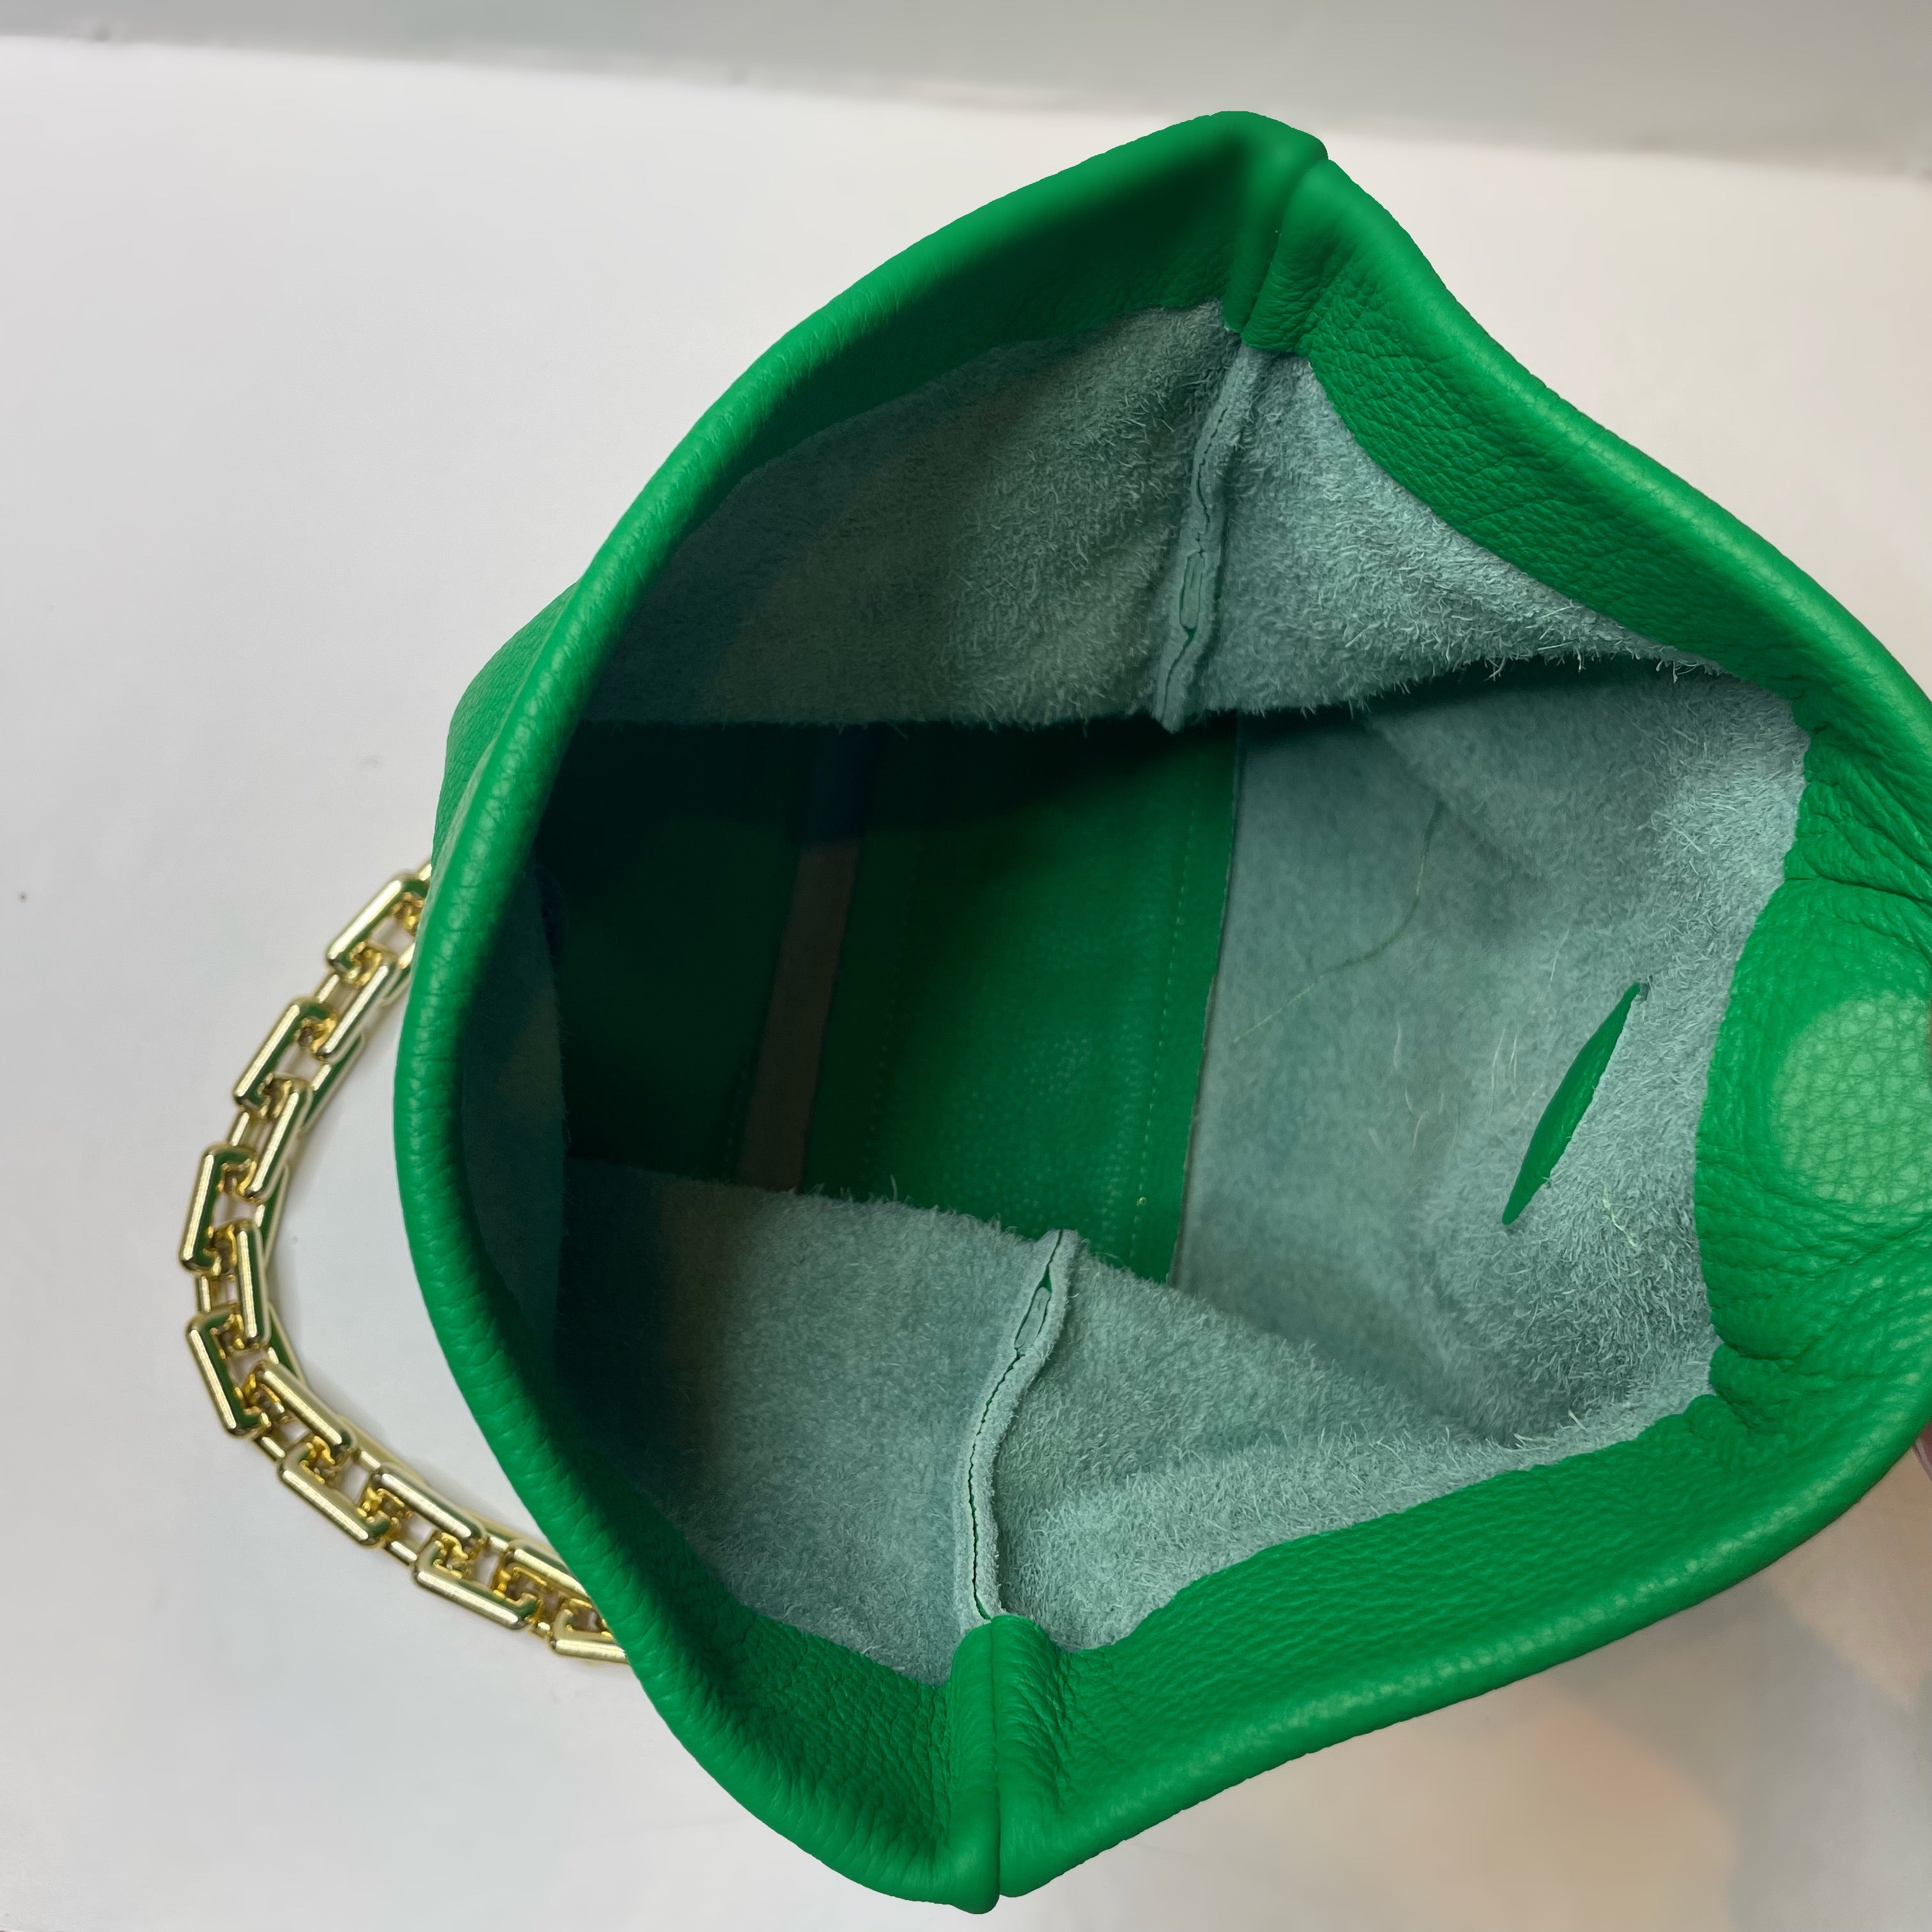 Sicily Verde Leather Handbag